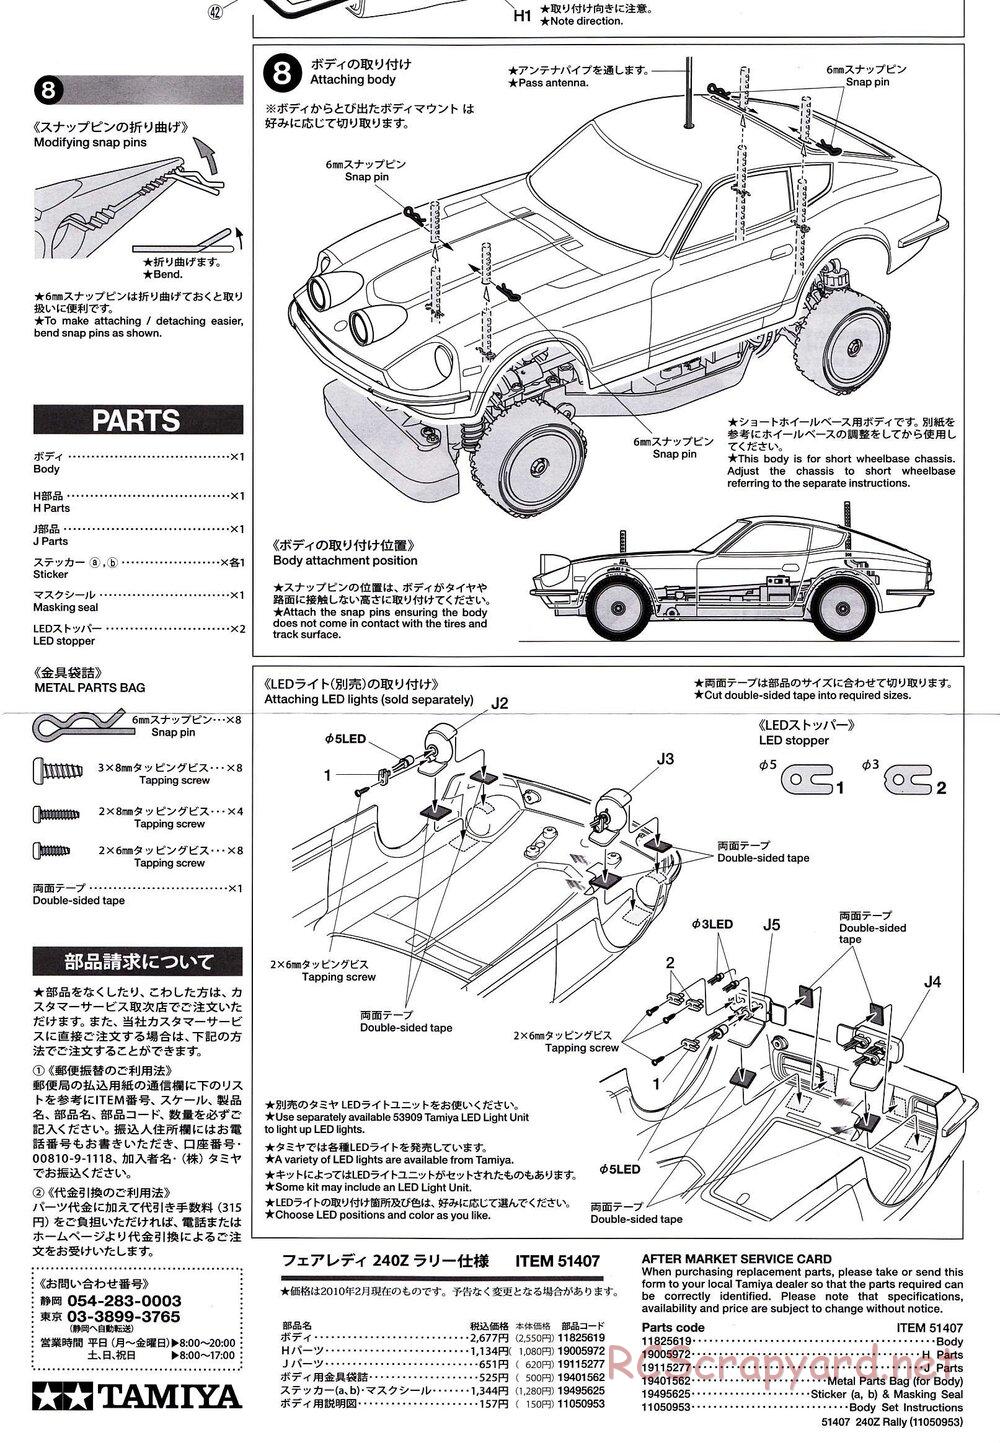 Tamiya - Datsun 240Z Rally Version - DF-03Ra Chassis - Body Manual - Page 4